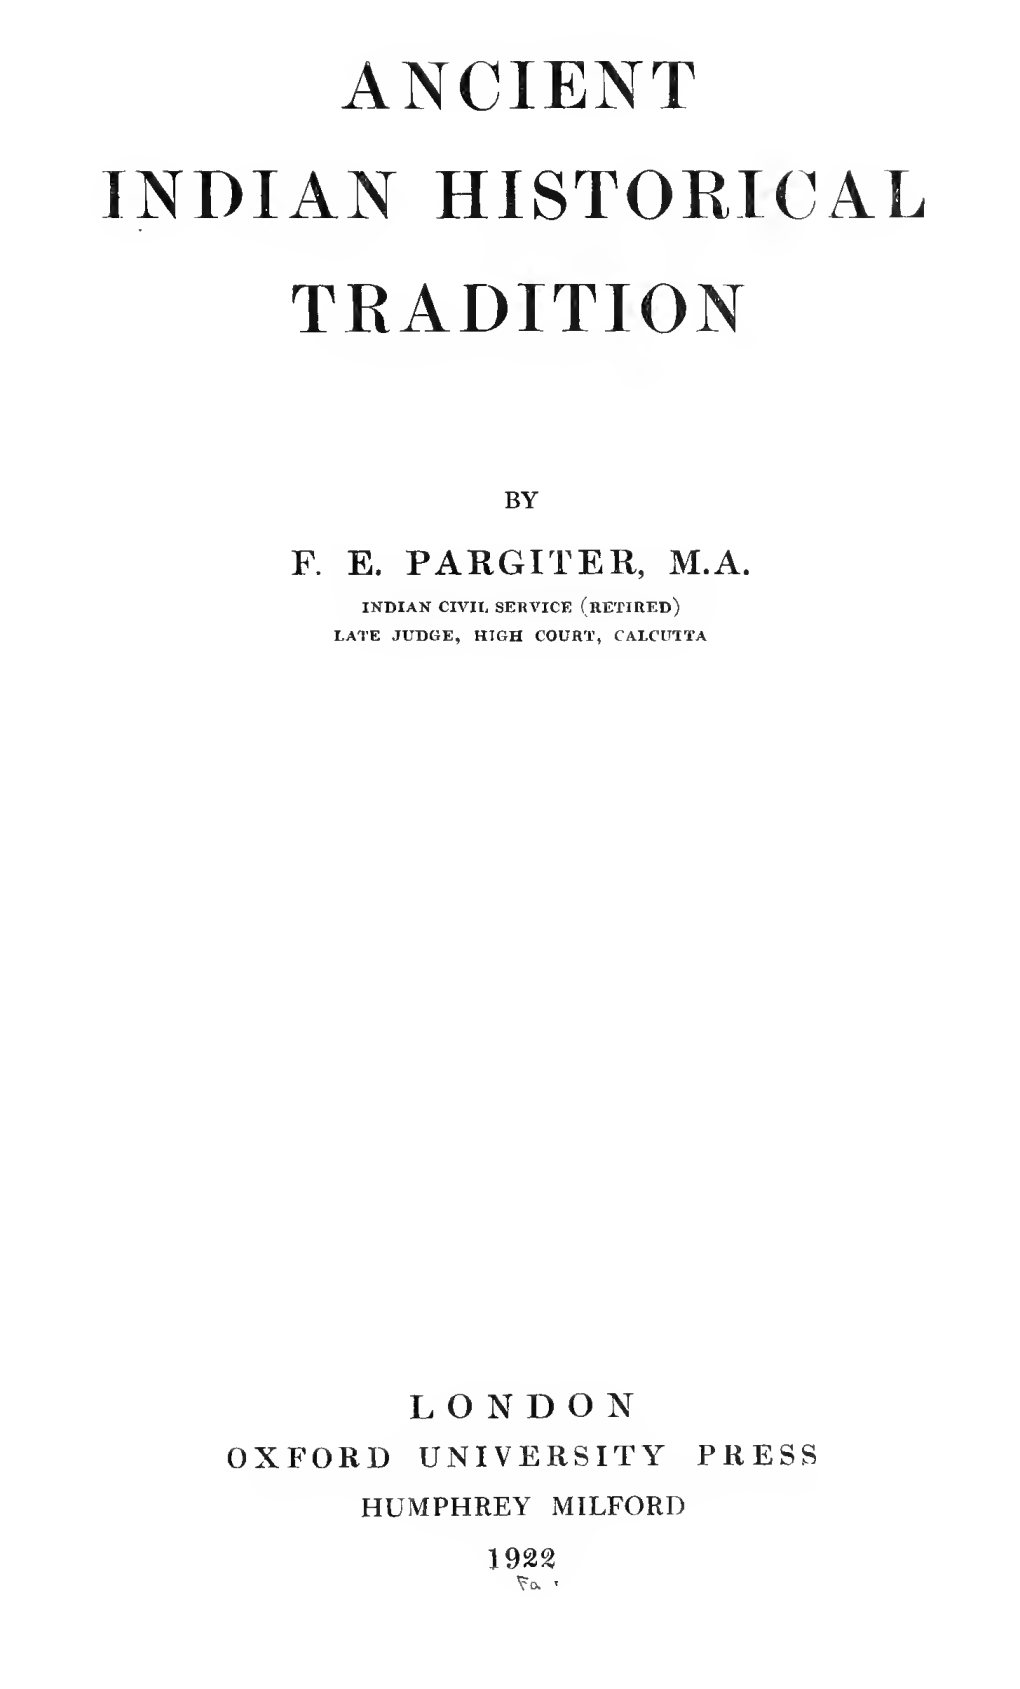 Pargiter FE 1922 on Raghuvamsa and Ramayana.Pdf